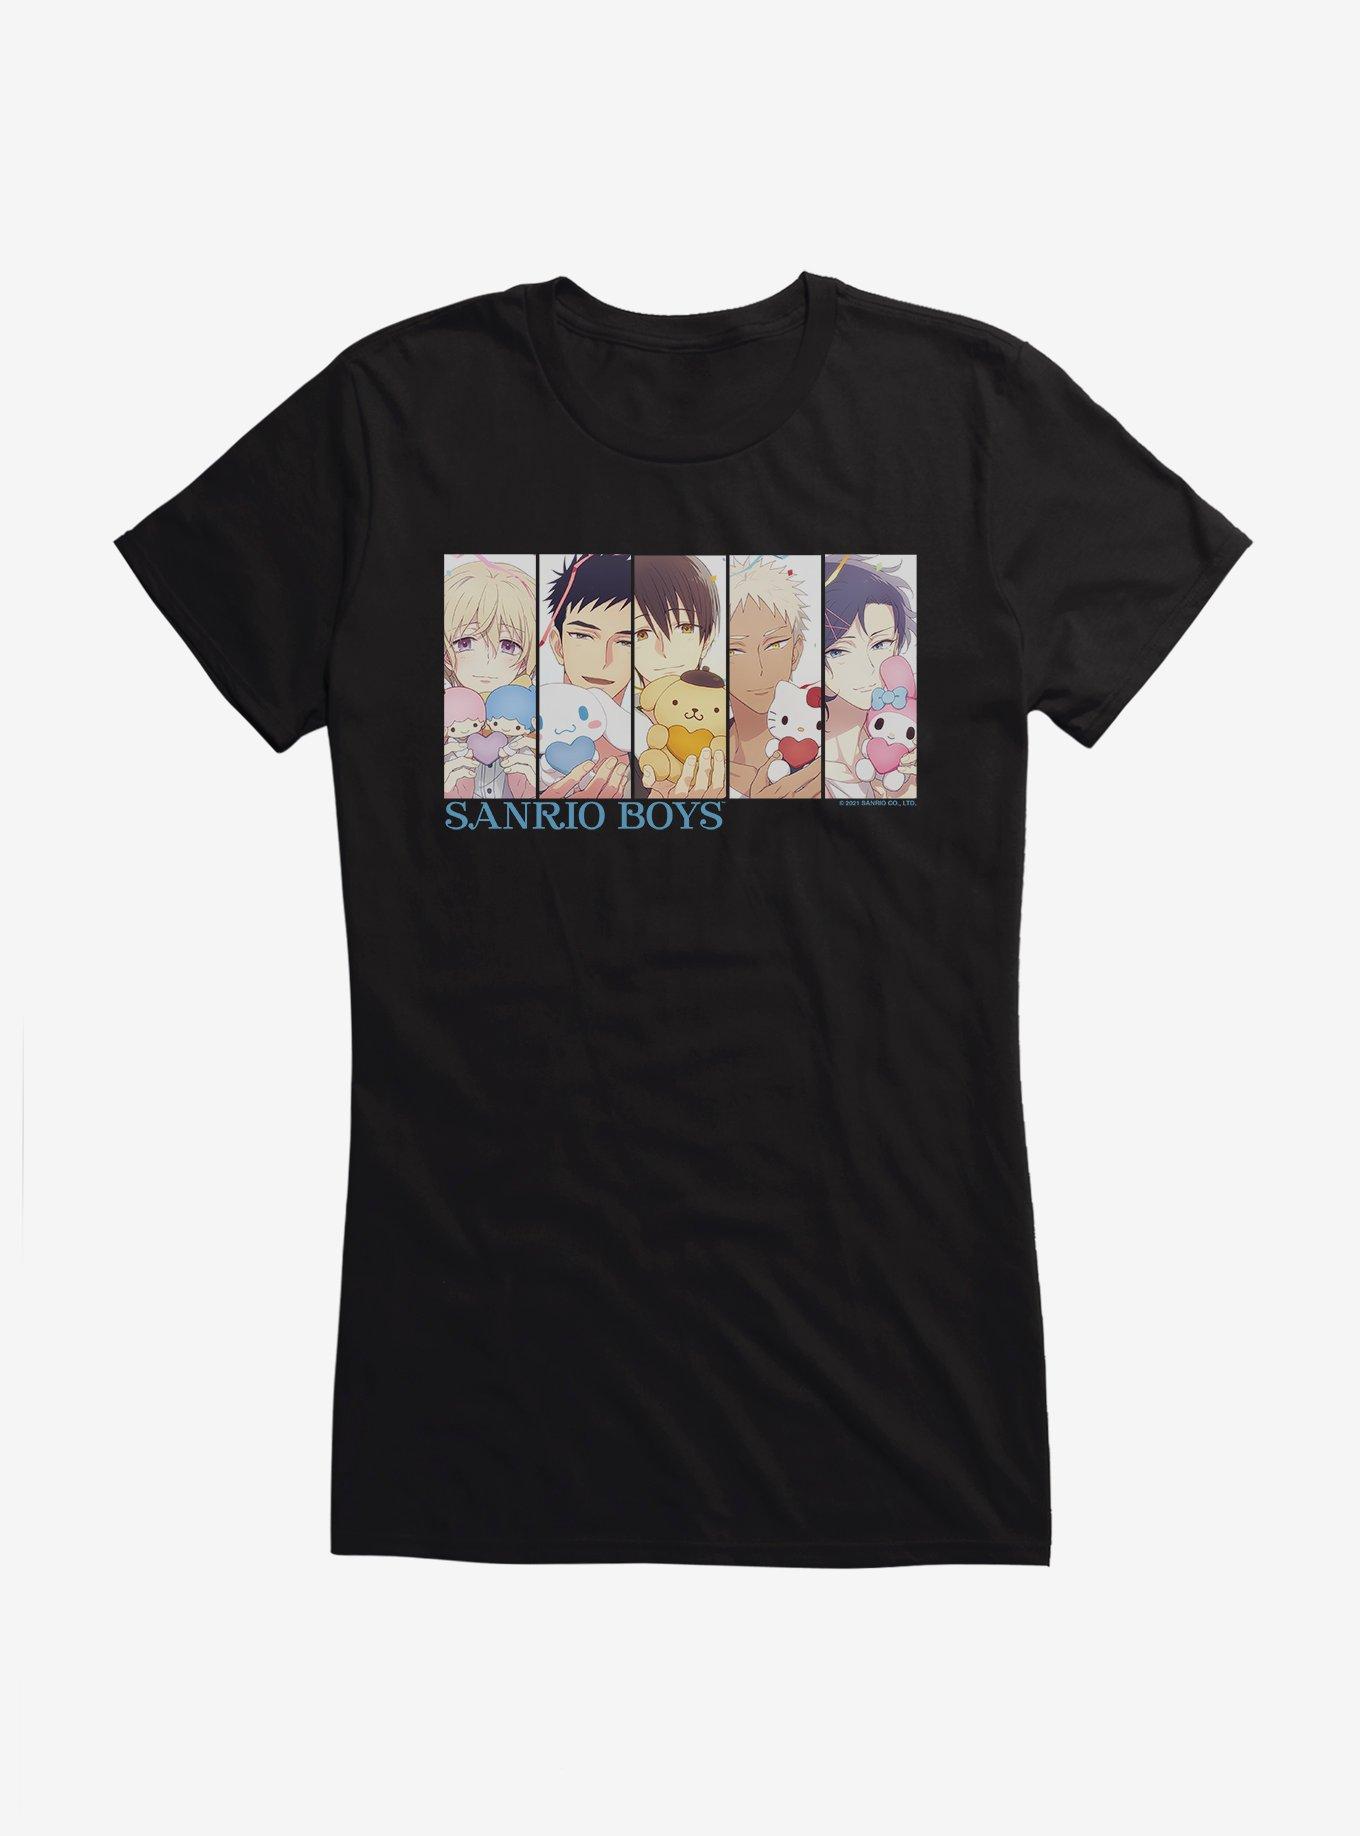 Sanrio Boys Cover Girls T-Shirt